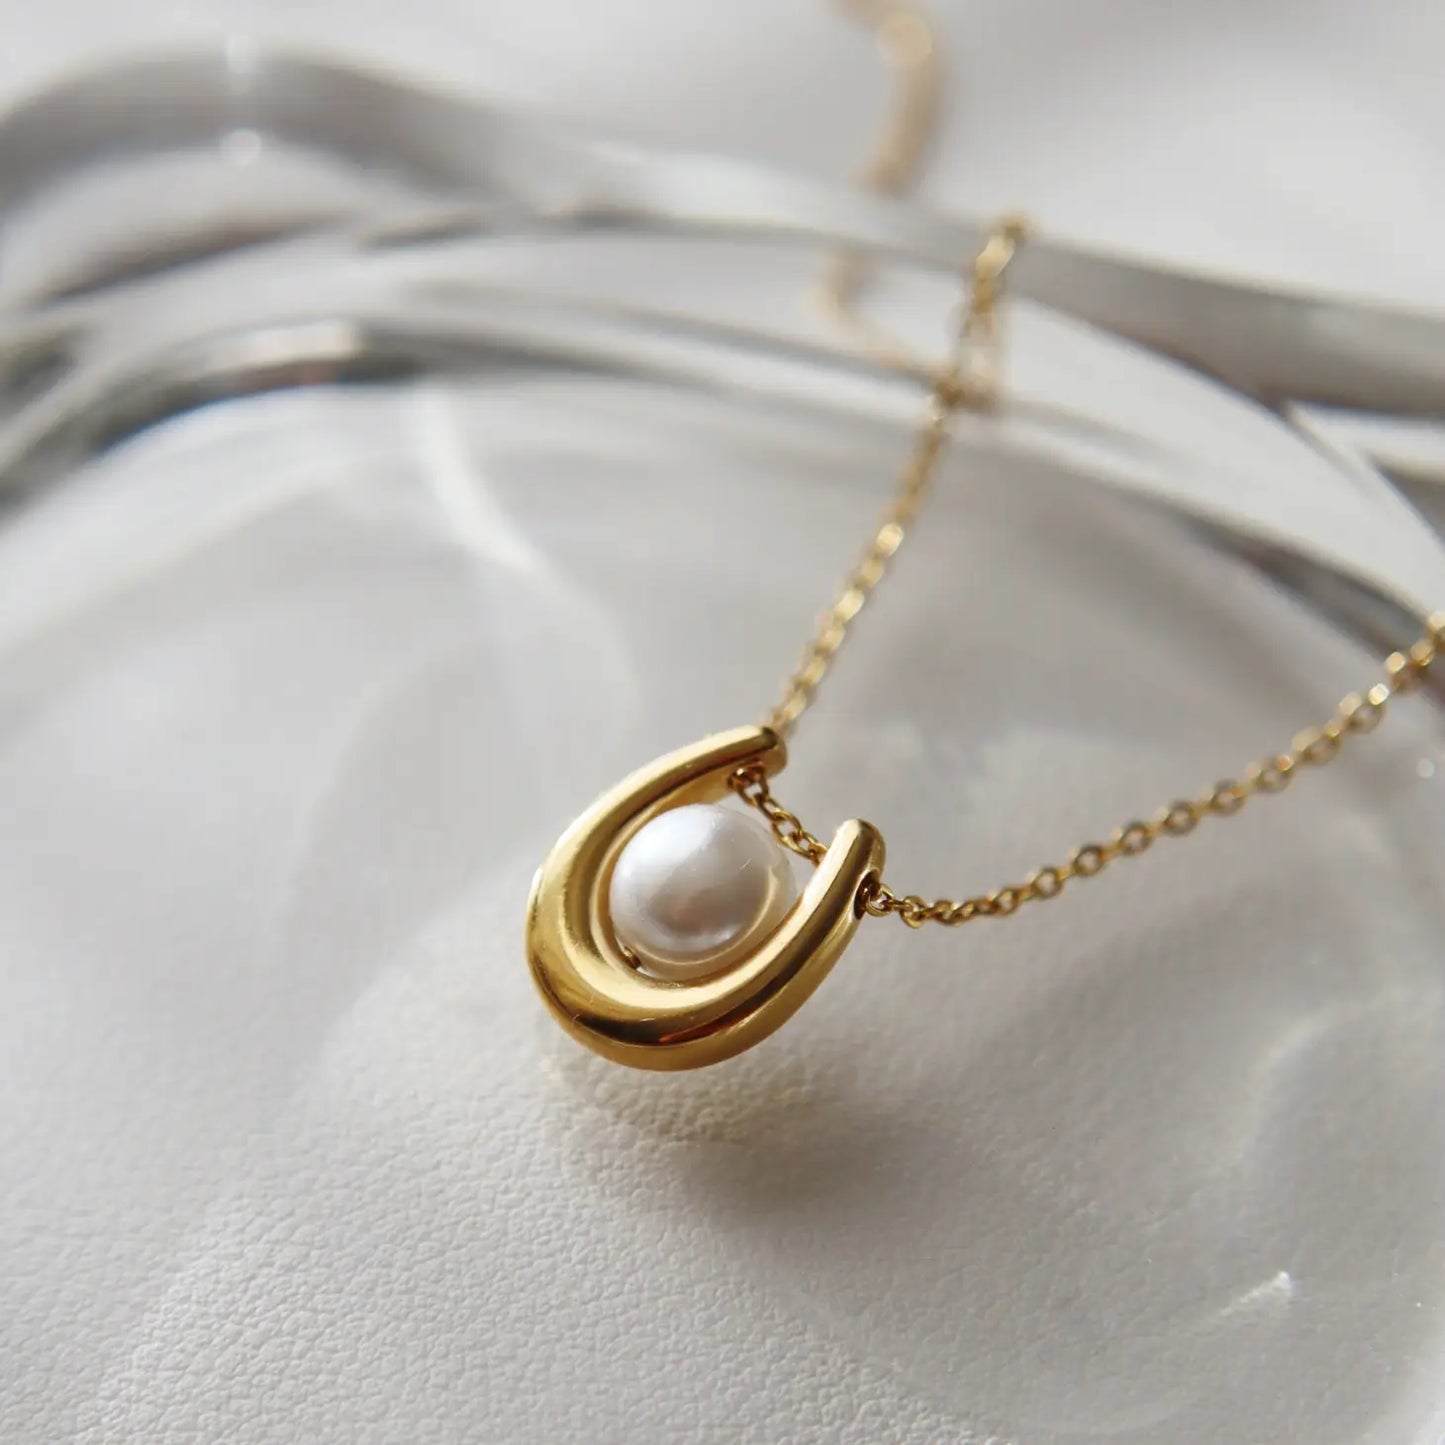 Jessa Jewelry's Ava Pearl Pendant Necklace.